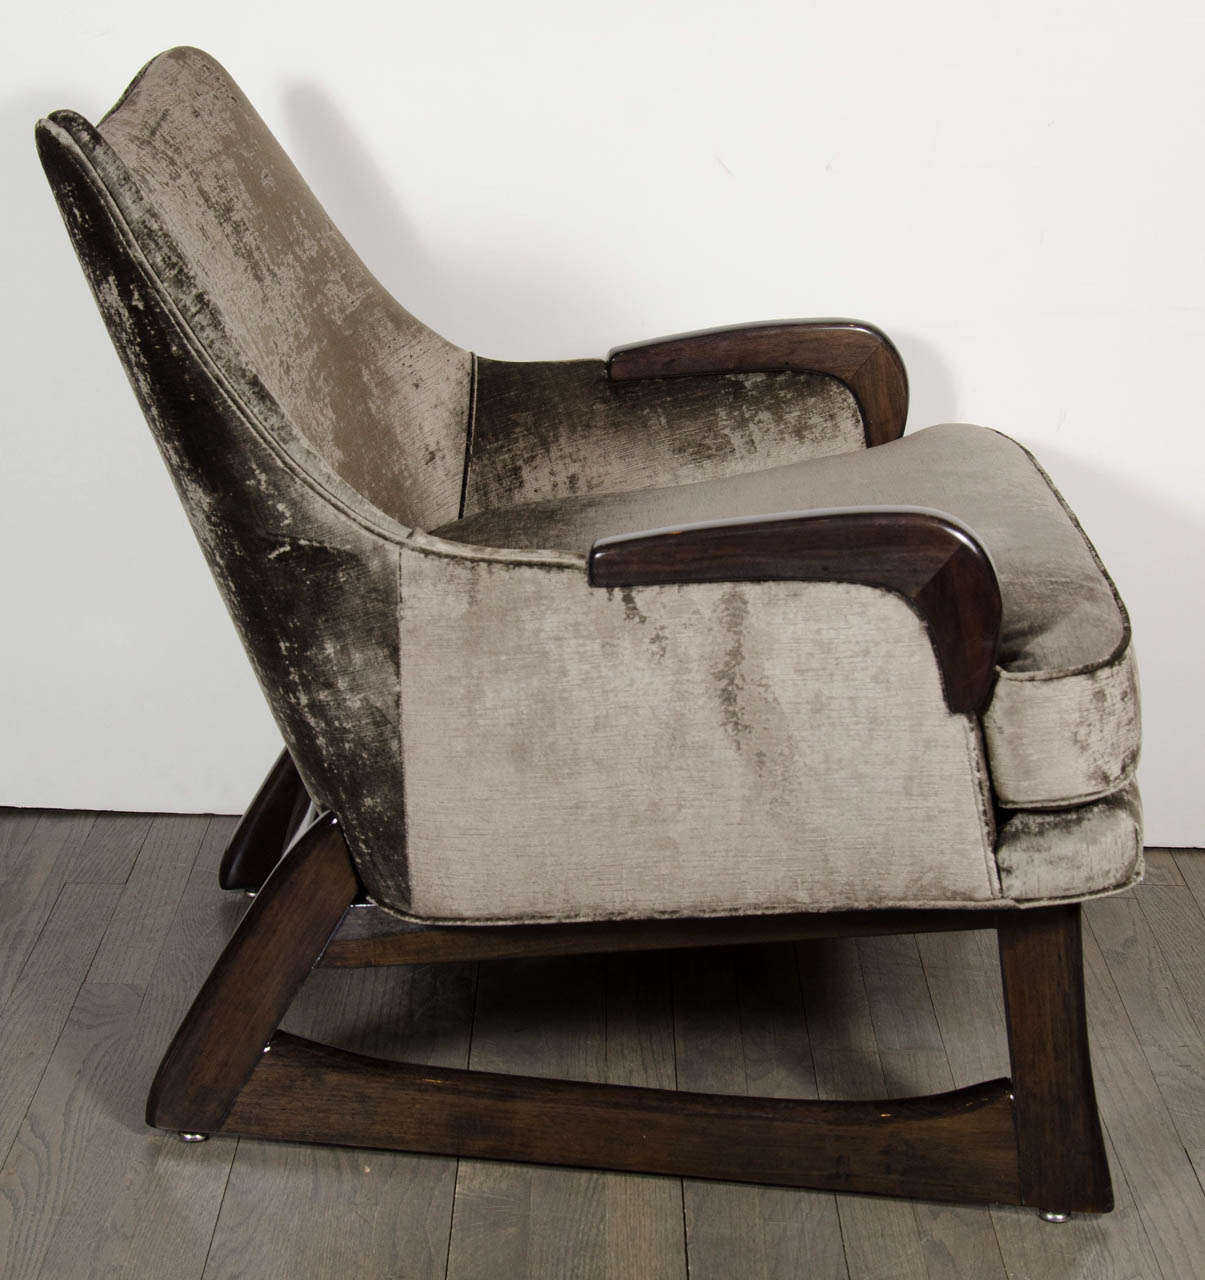 American Mid-Century Modernist Sleigh Form Armchair with Ebonized Walnut Legs & Detailing